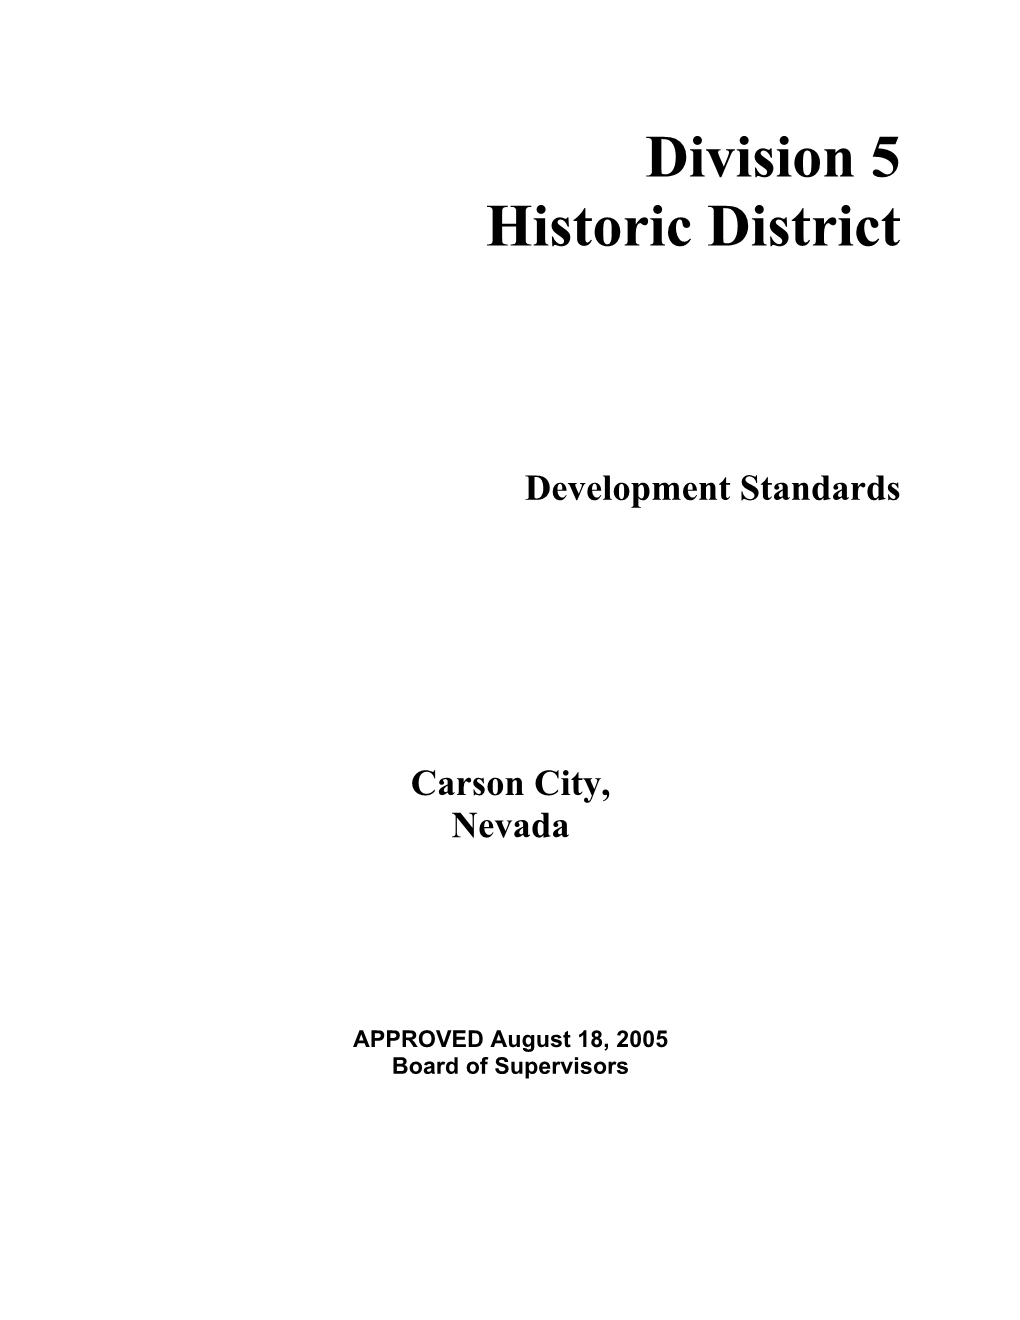 Division 5 Historic District